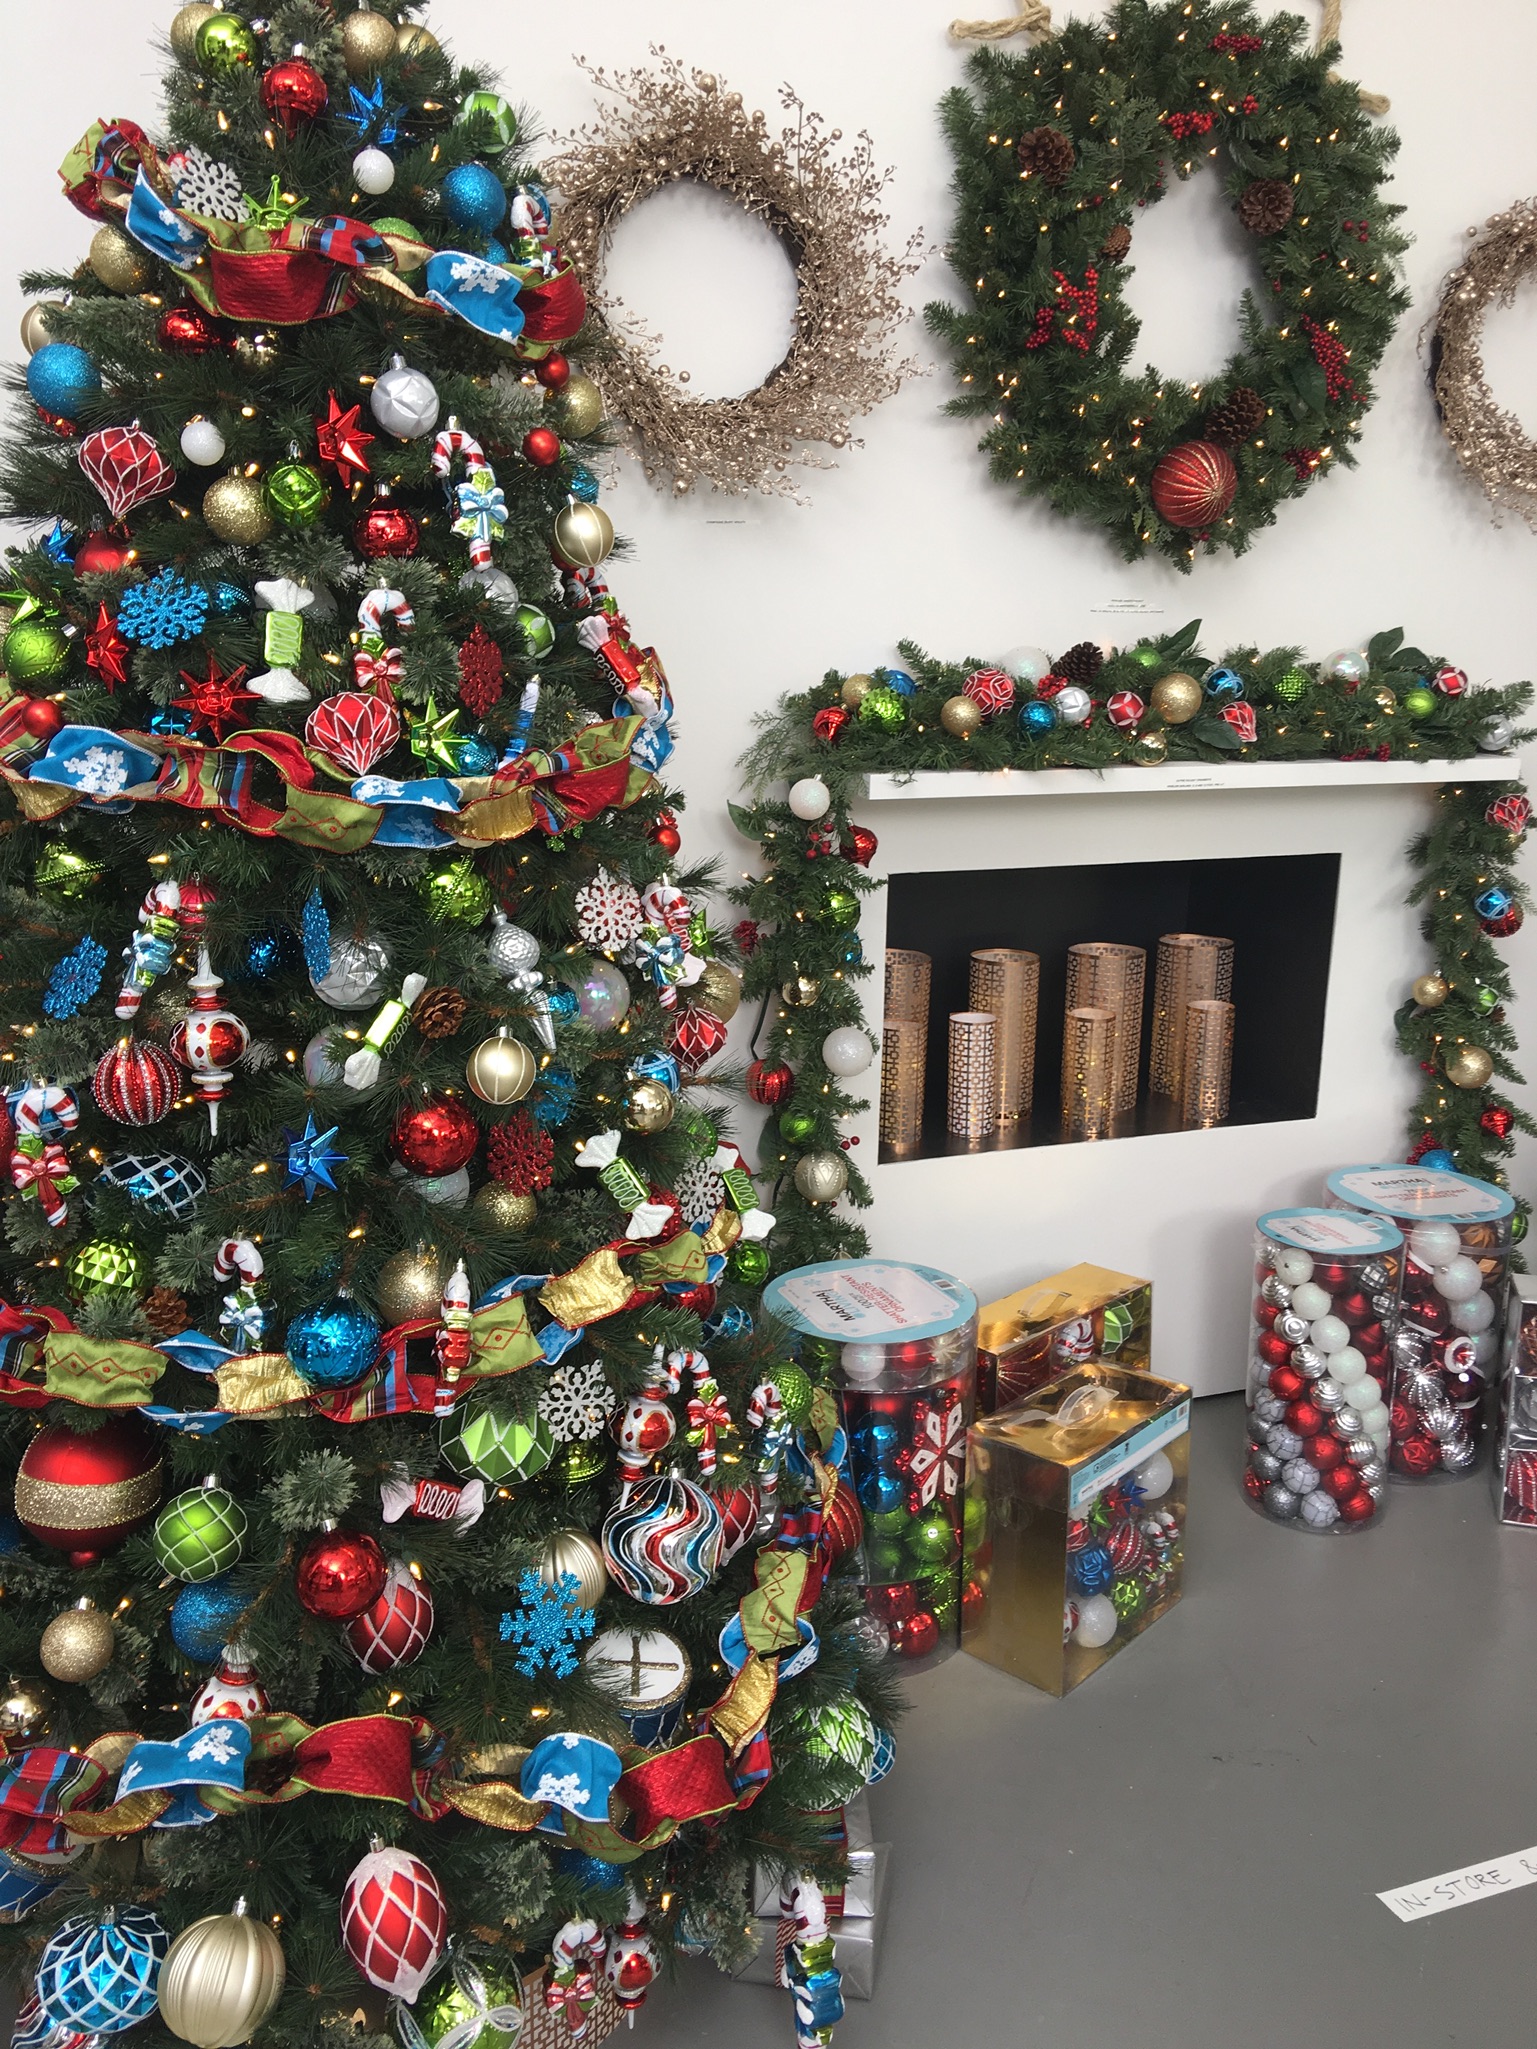 Festive holiday decorations home depot ideas for a joyful home